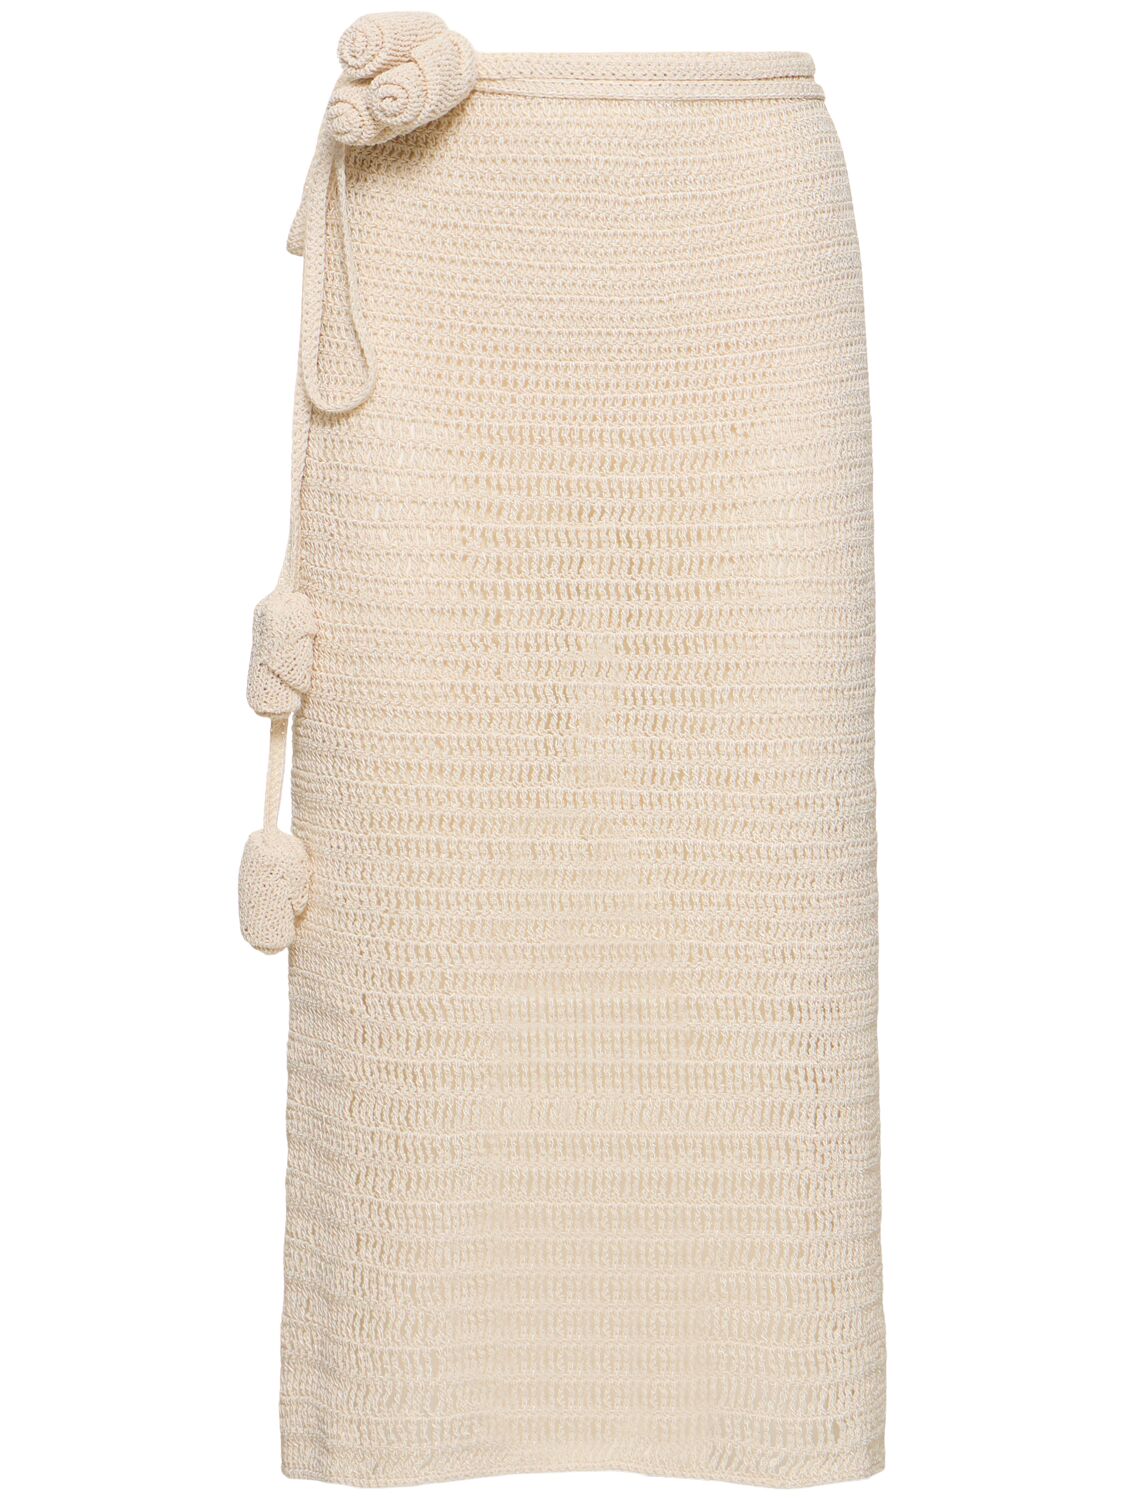 Crocheted Cotton Blend Skirt